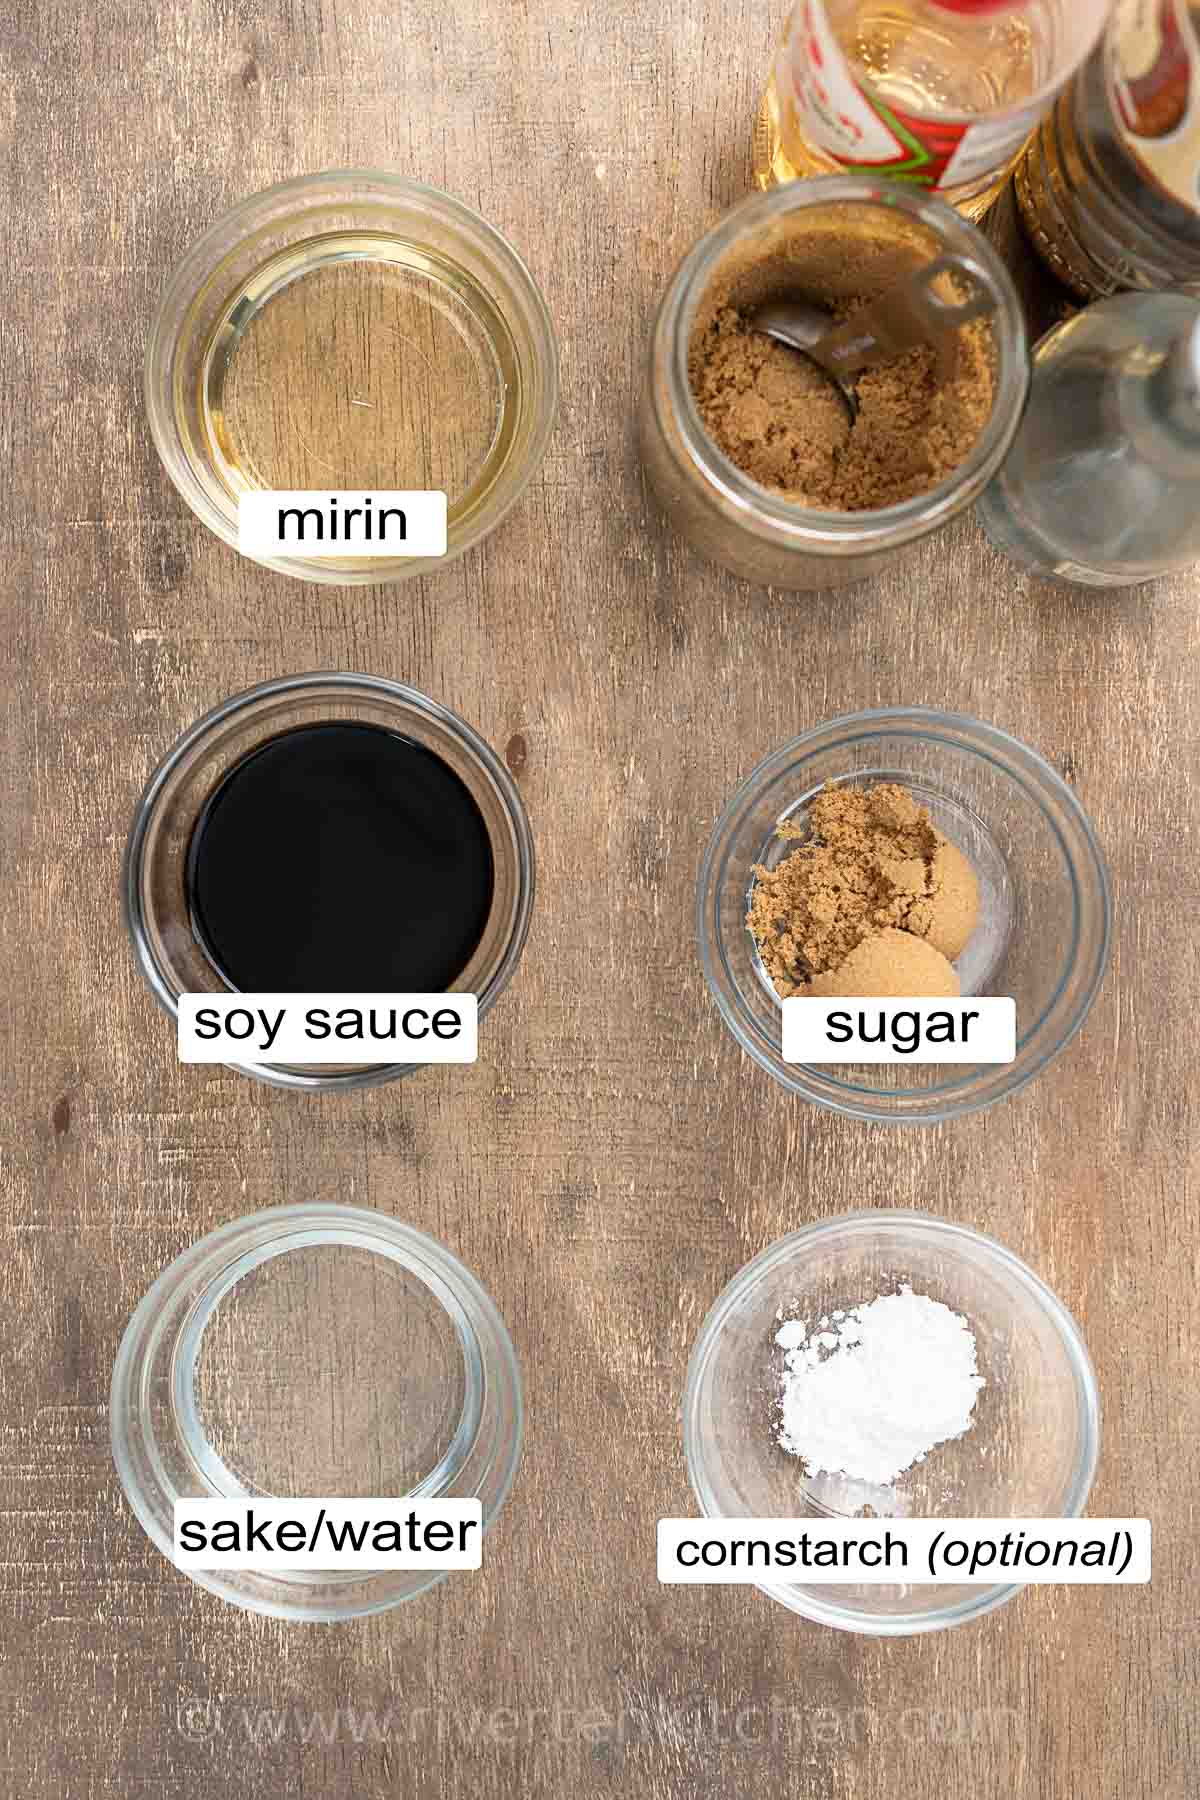 soy sauce, sake or water, brown sugar, mirin and optional cornstarch.